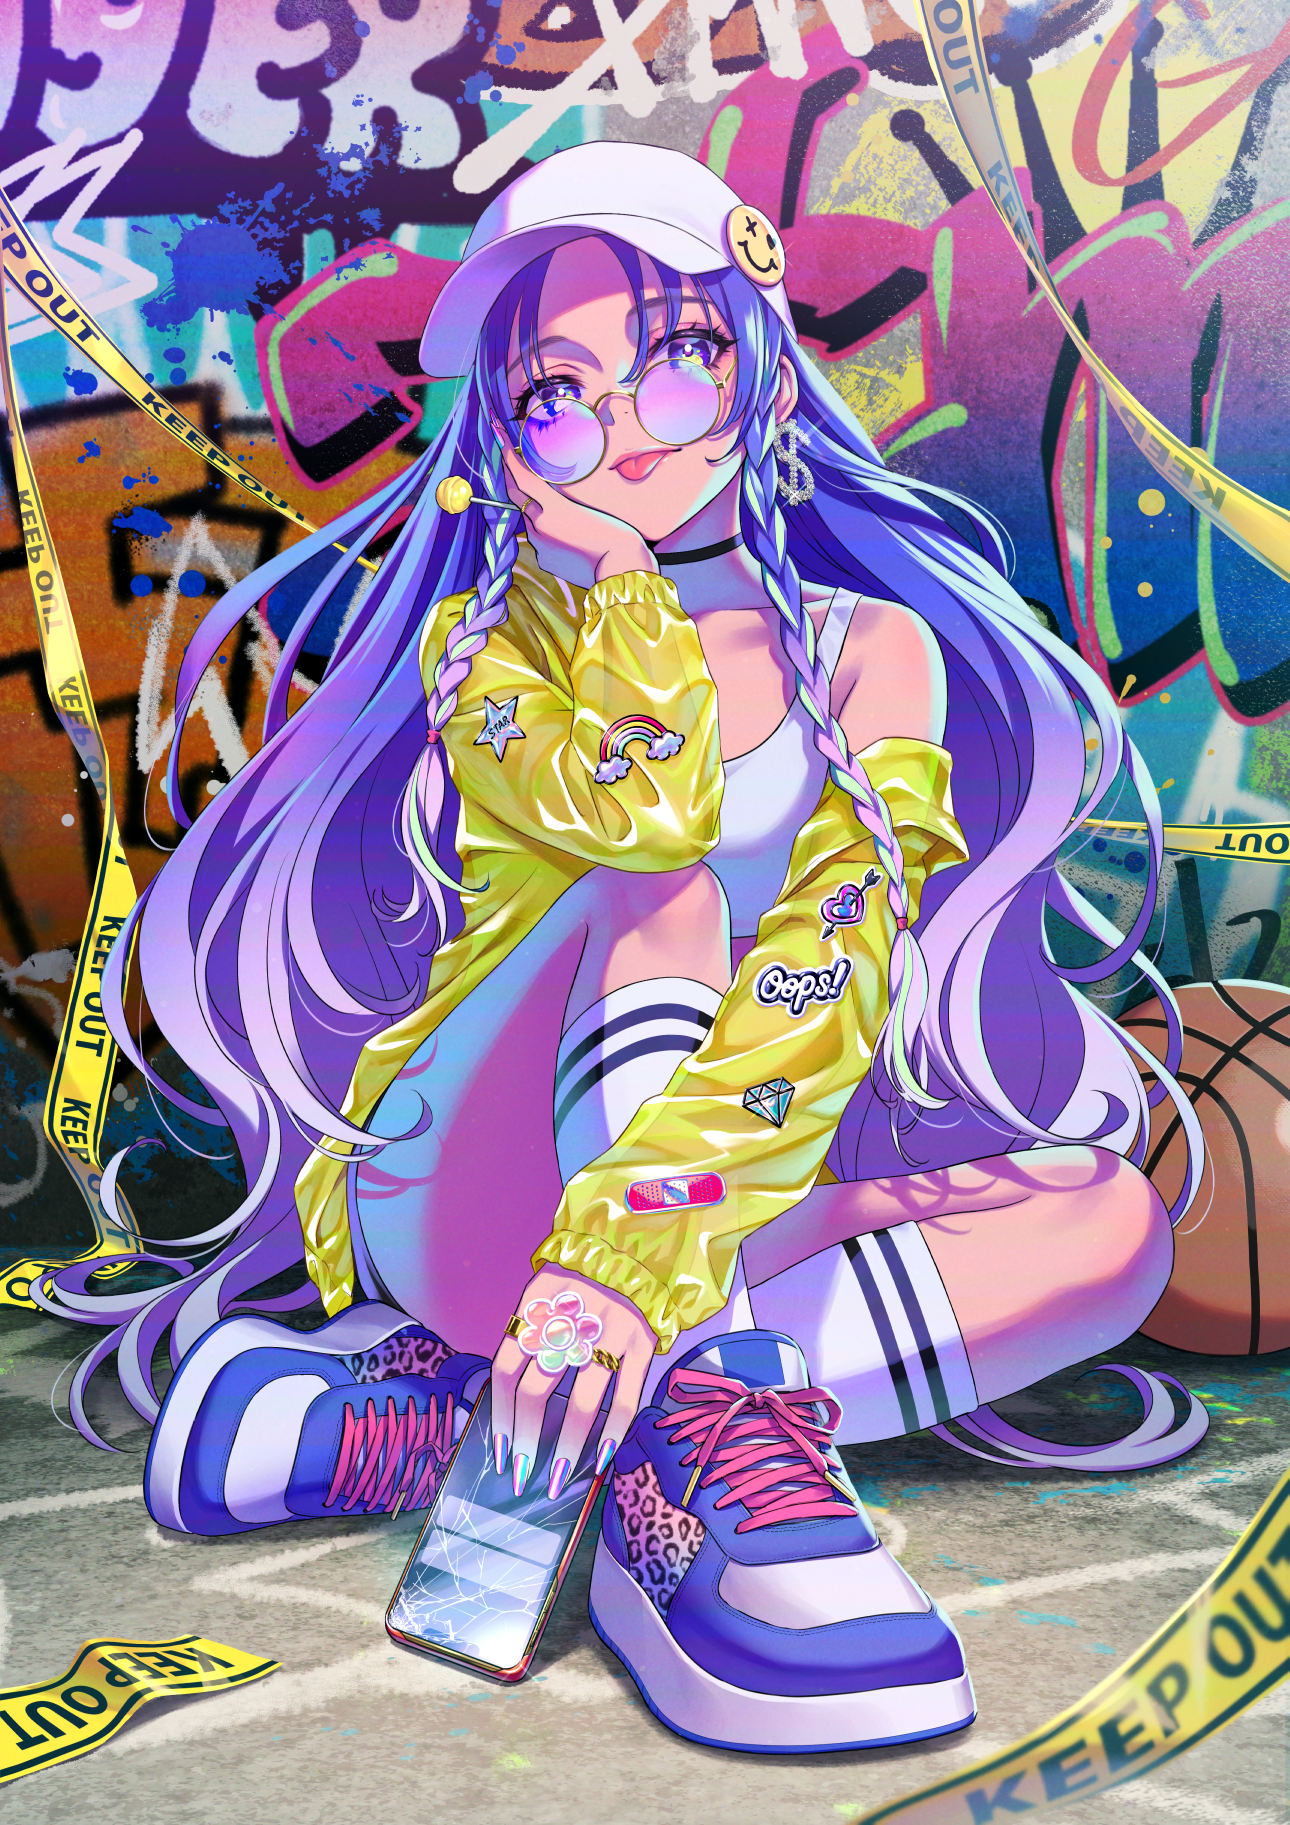 Anime 1290x1825 anime anime girls hat sunglasses shoes phone tongue out graffiti artwork Morikura En